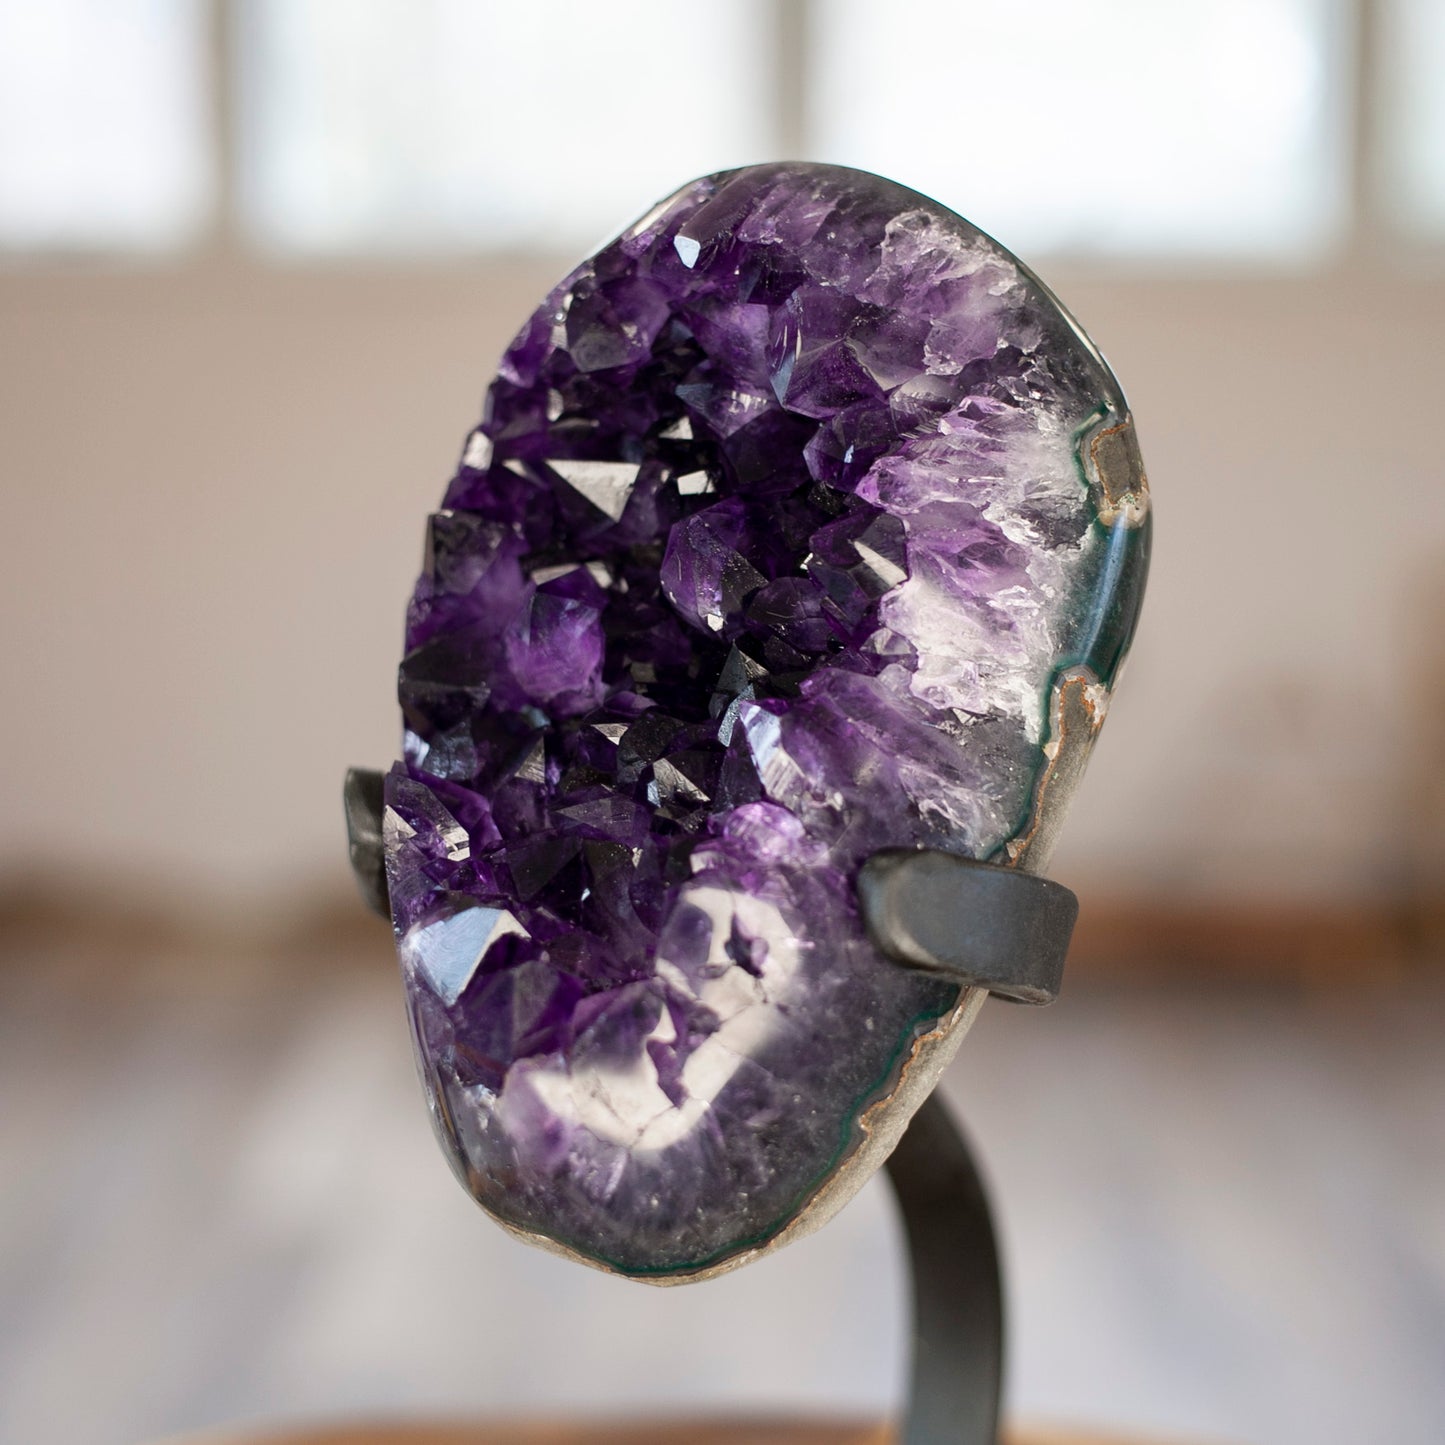 Uruguay Amethyst Crystal With Iron Stand, High Grade Amethyst